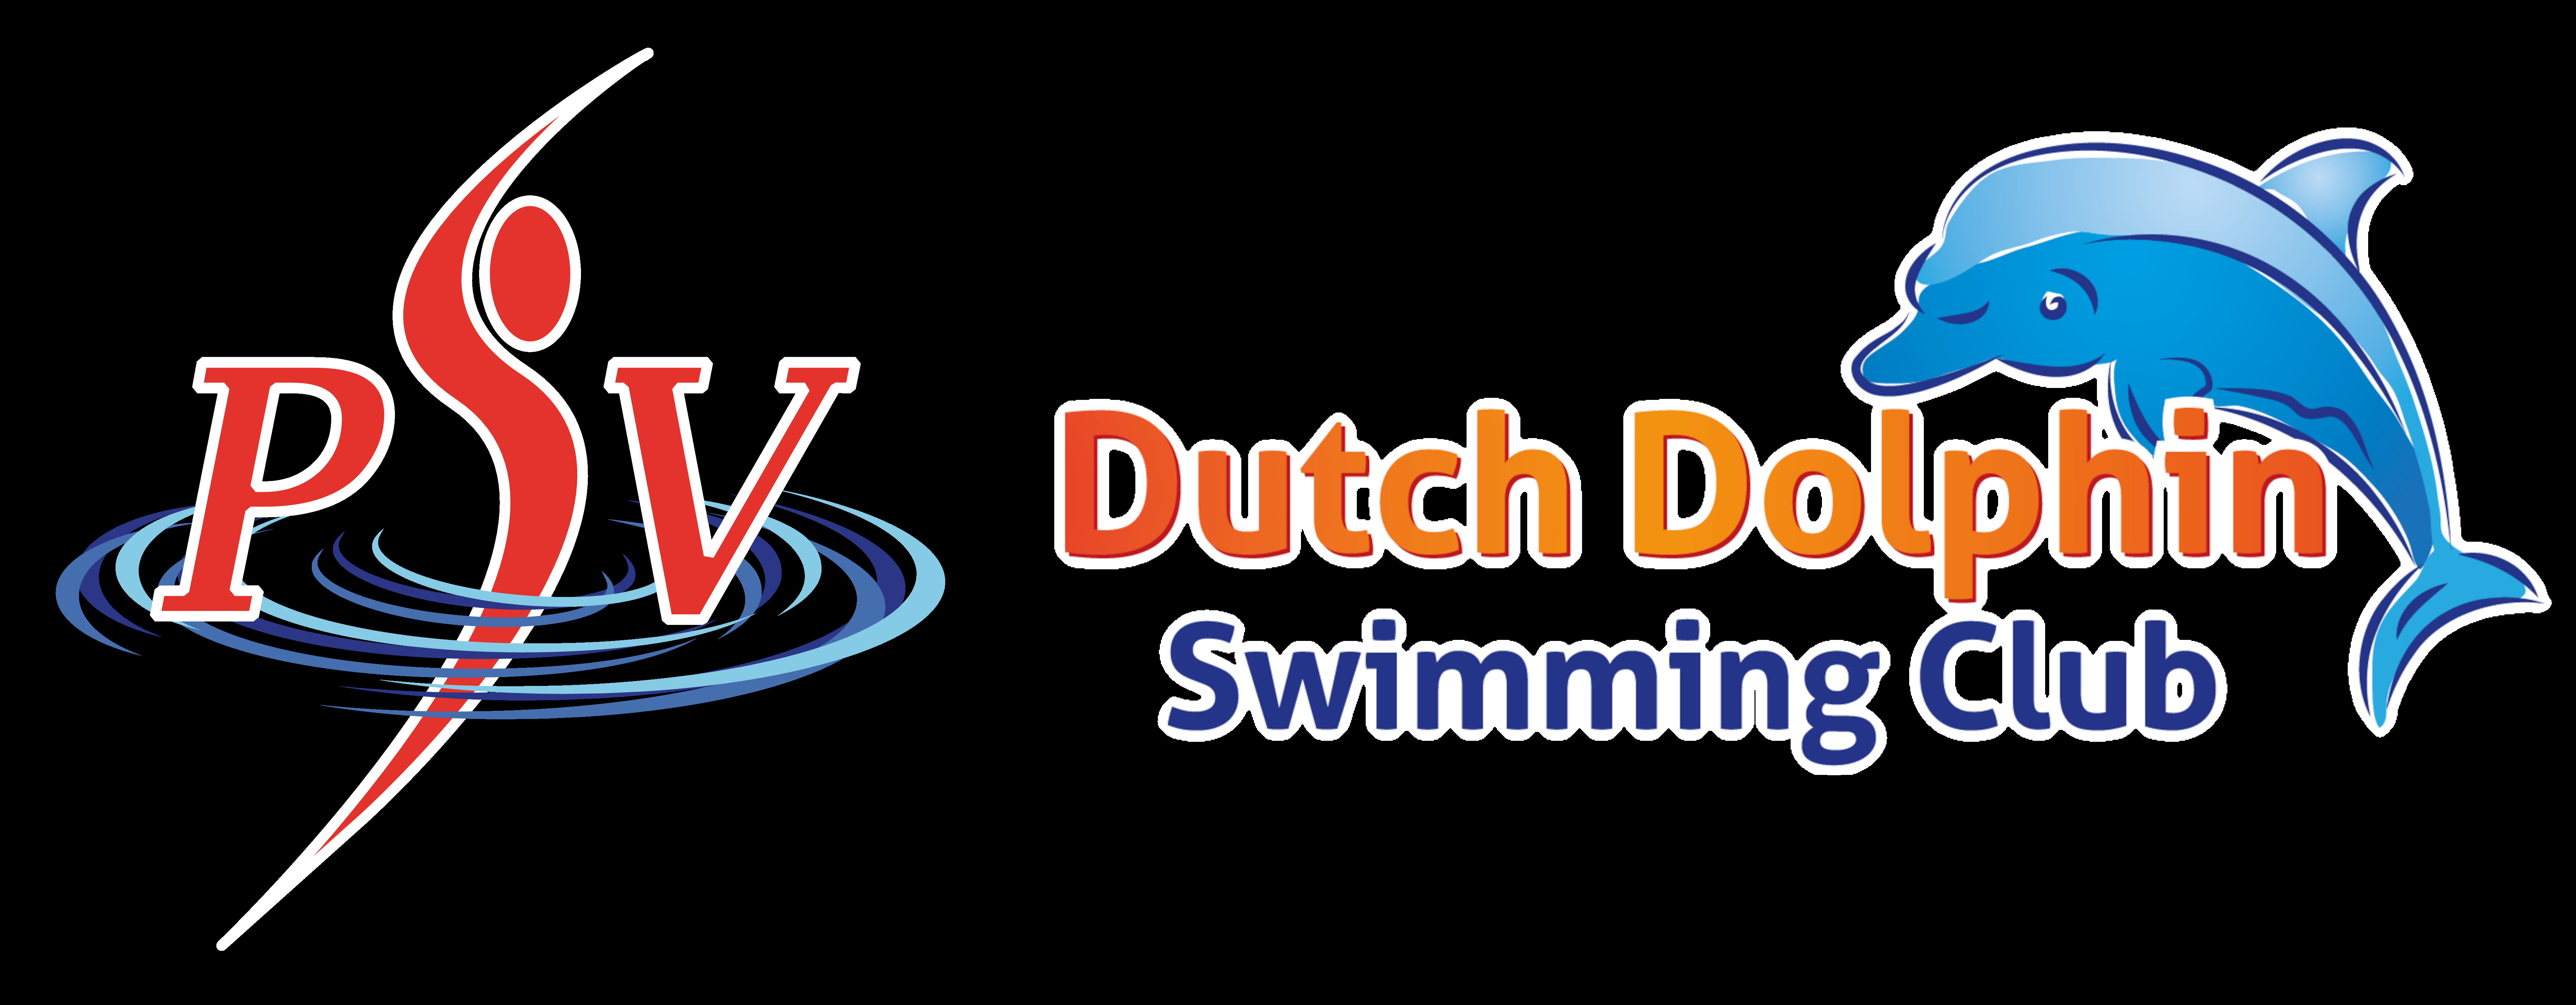 Logo PSV - Dutch Dolphin Swimming Club